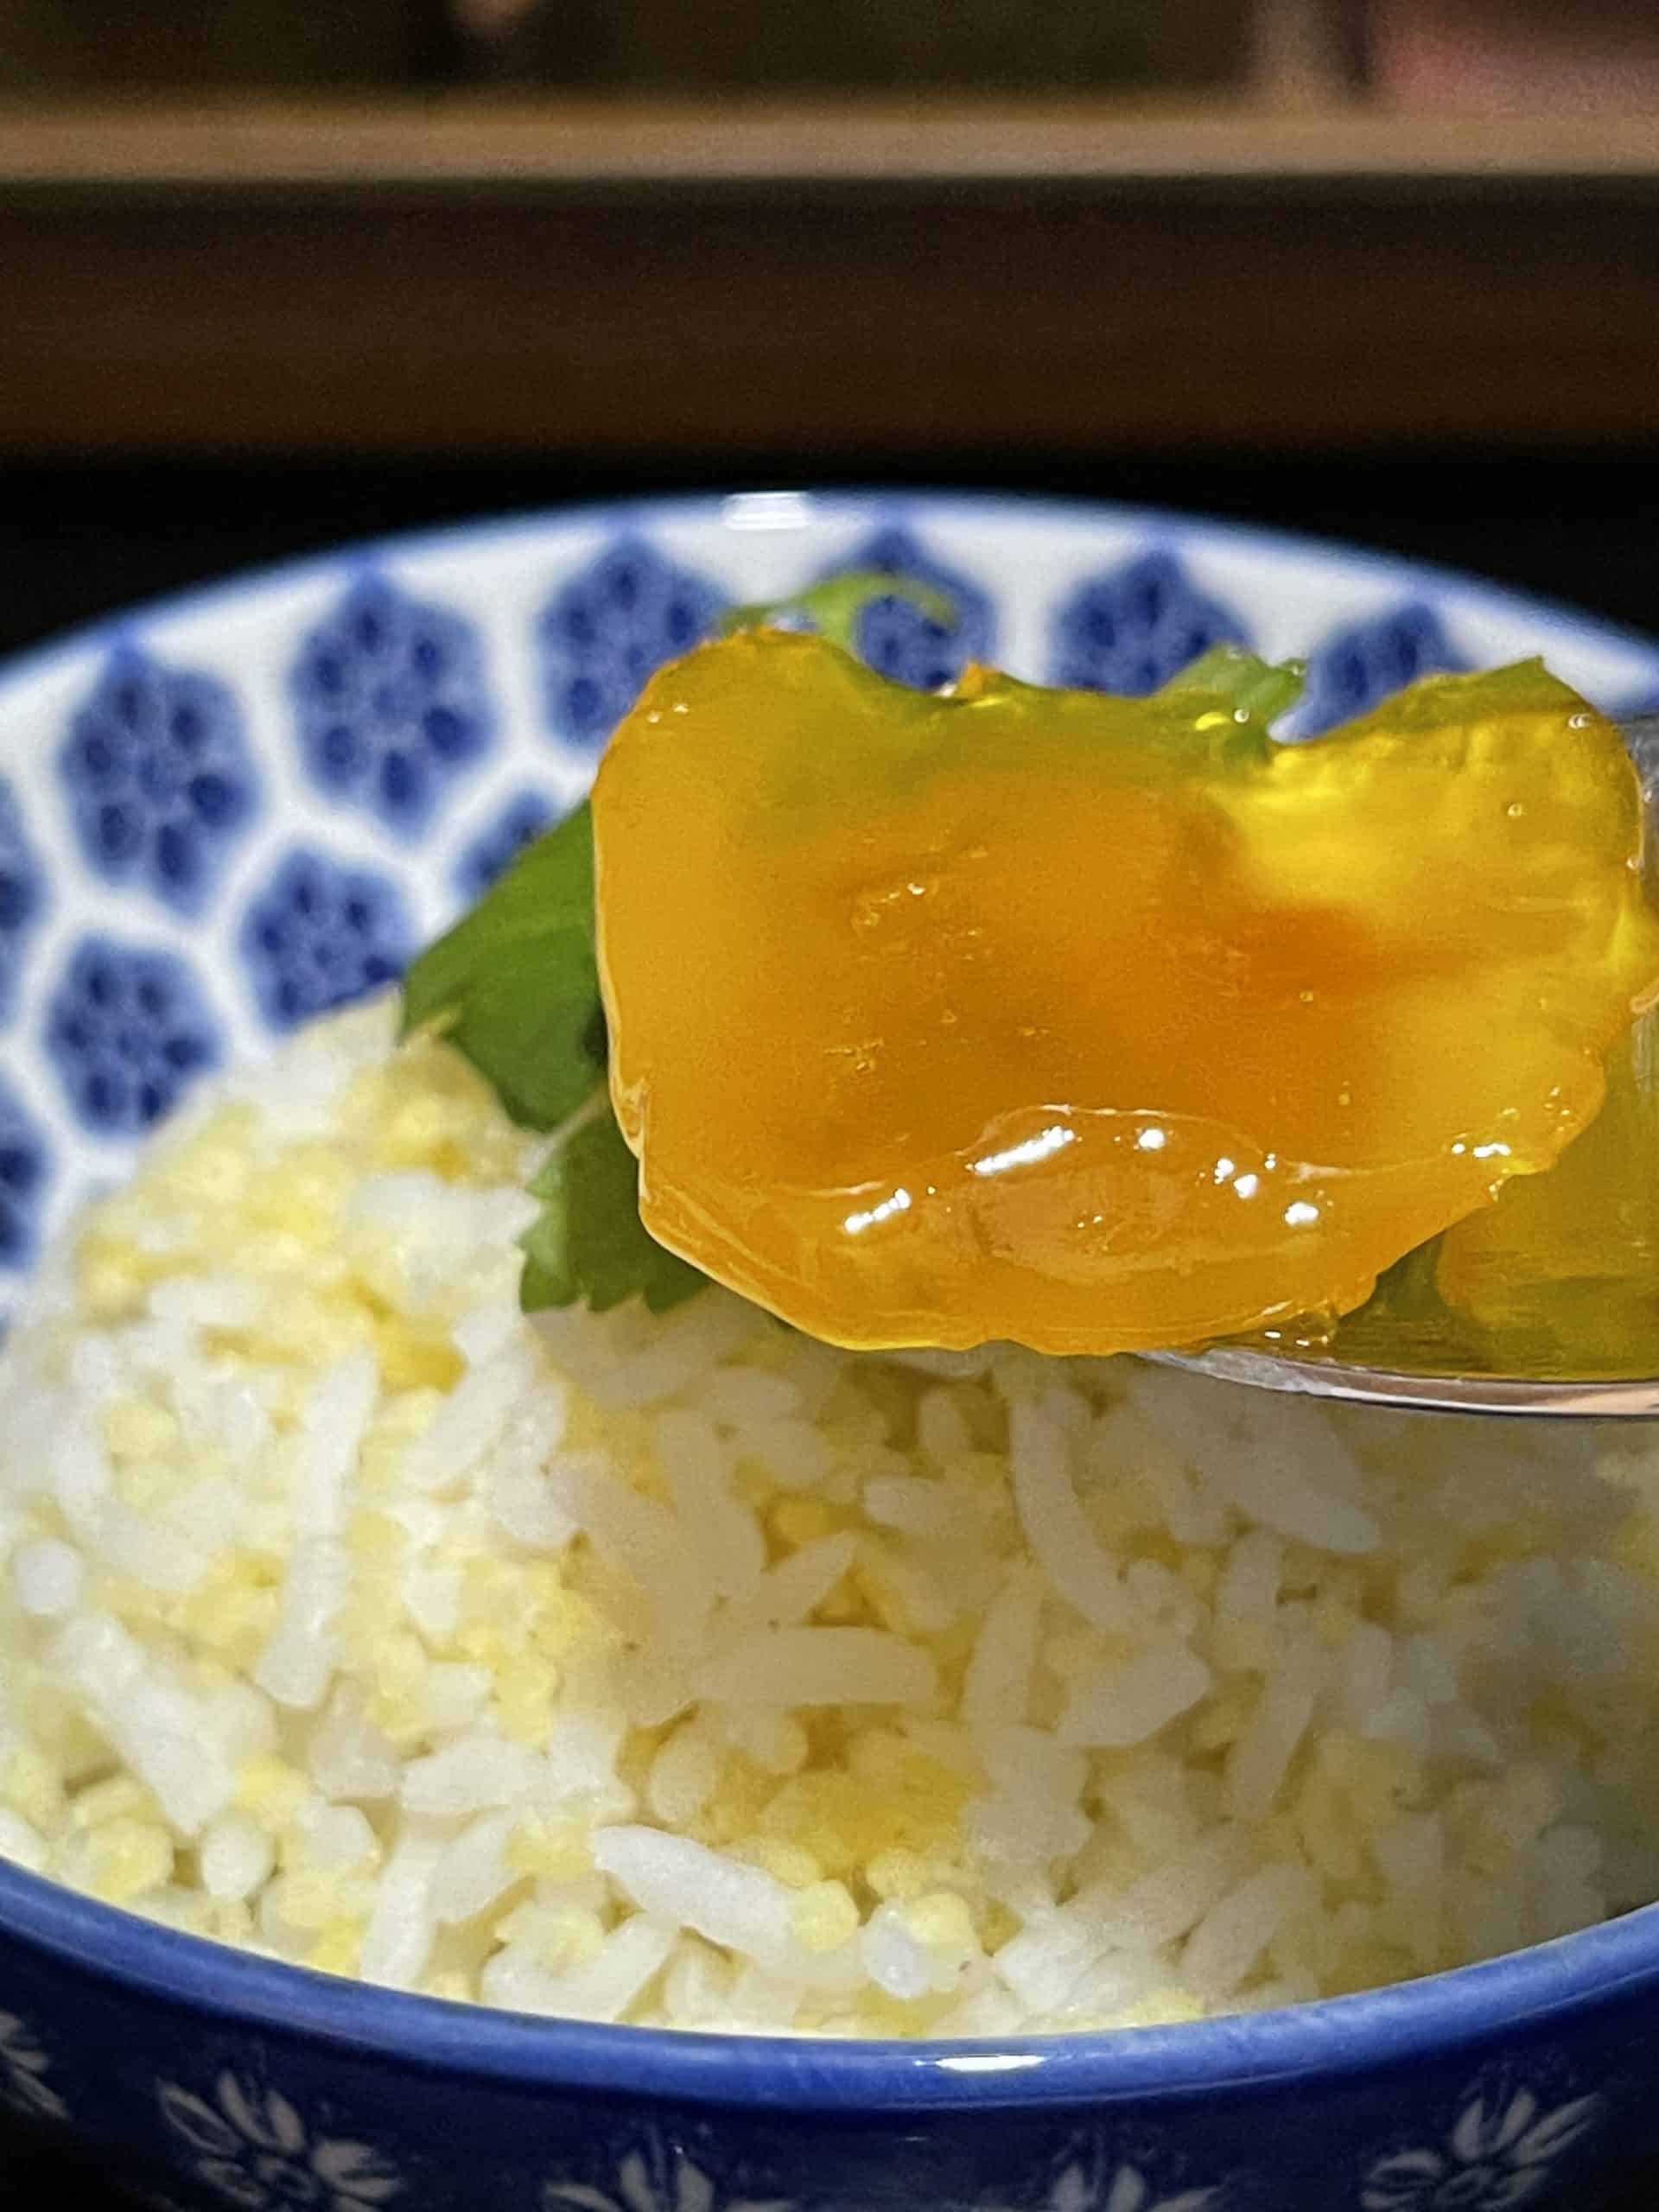 My Wok Life Cooking Blog - Egg Yolk Misozuke Recipe (日式味噌腌蛋黄) : Relaxing Meal Idea - Lotus Seed Dessert Soup Recipe